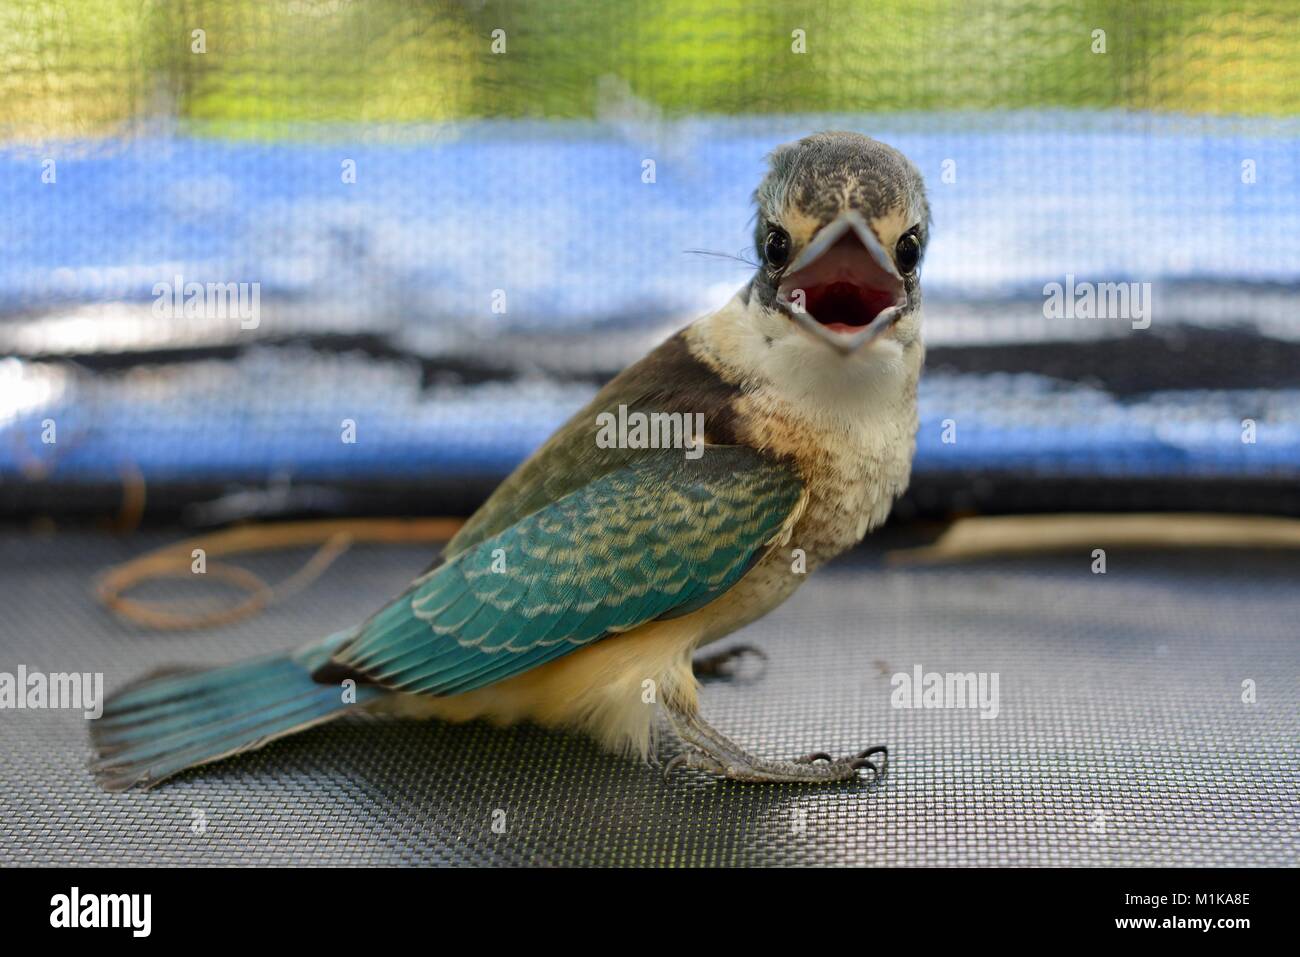 Juvenile Sacred kingfisher (Todiramphus sanctus) stuck in trampoline enclosure, Townsville, Queensland, Australia Stock Photo